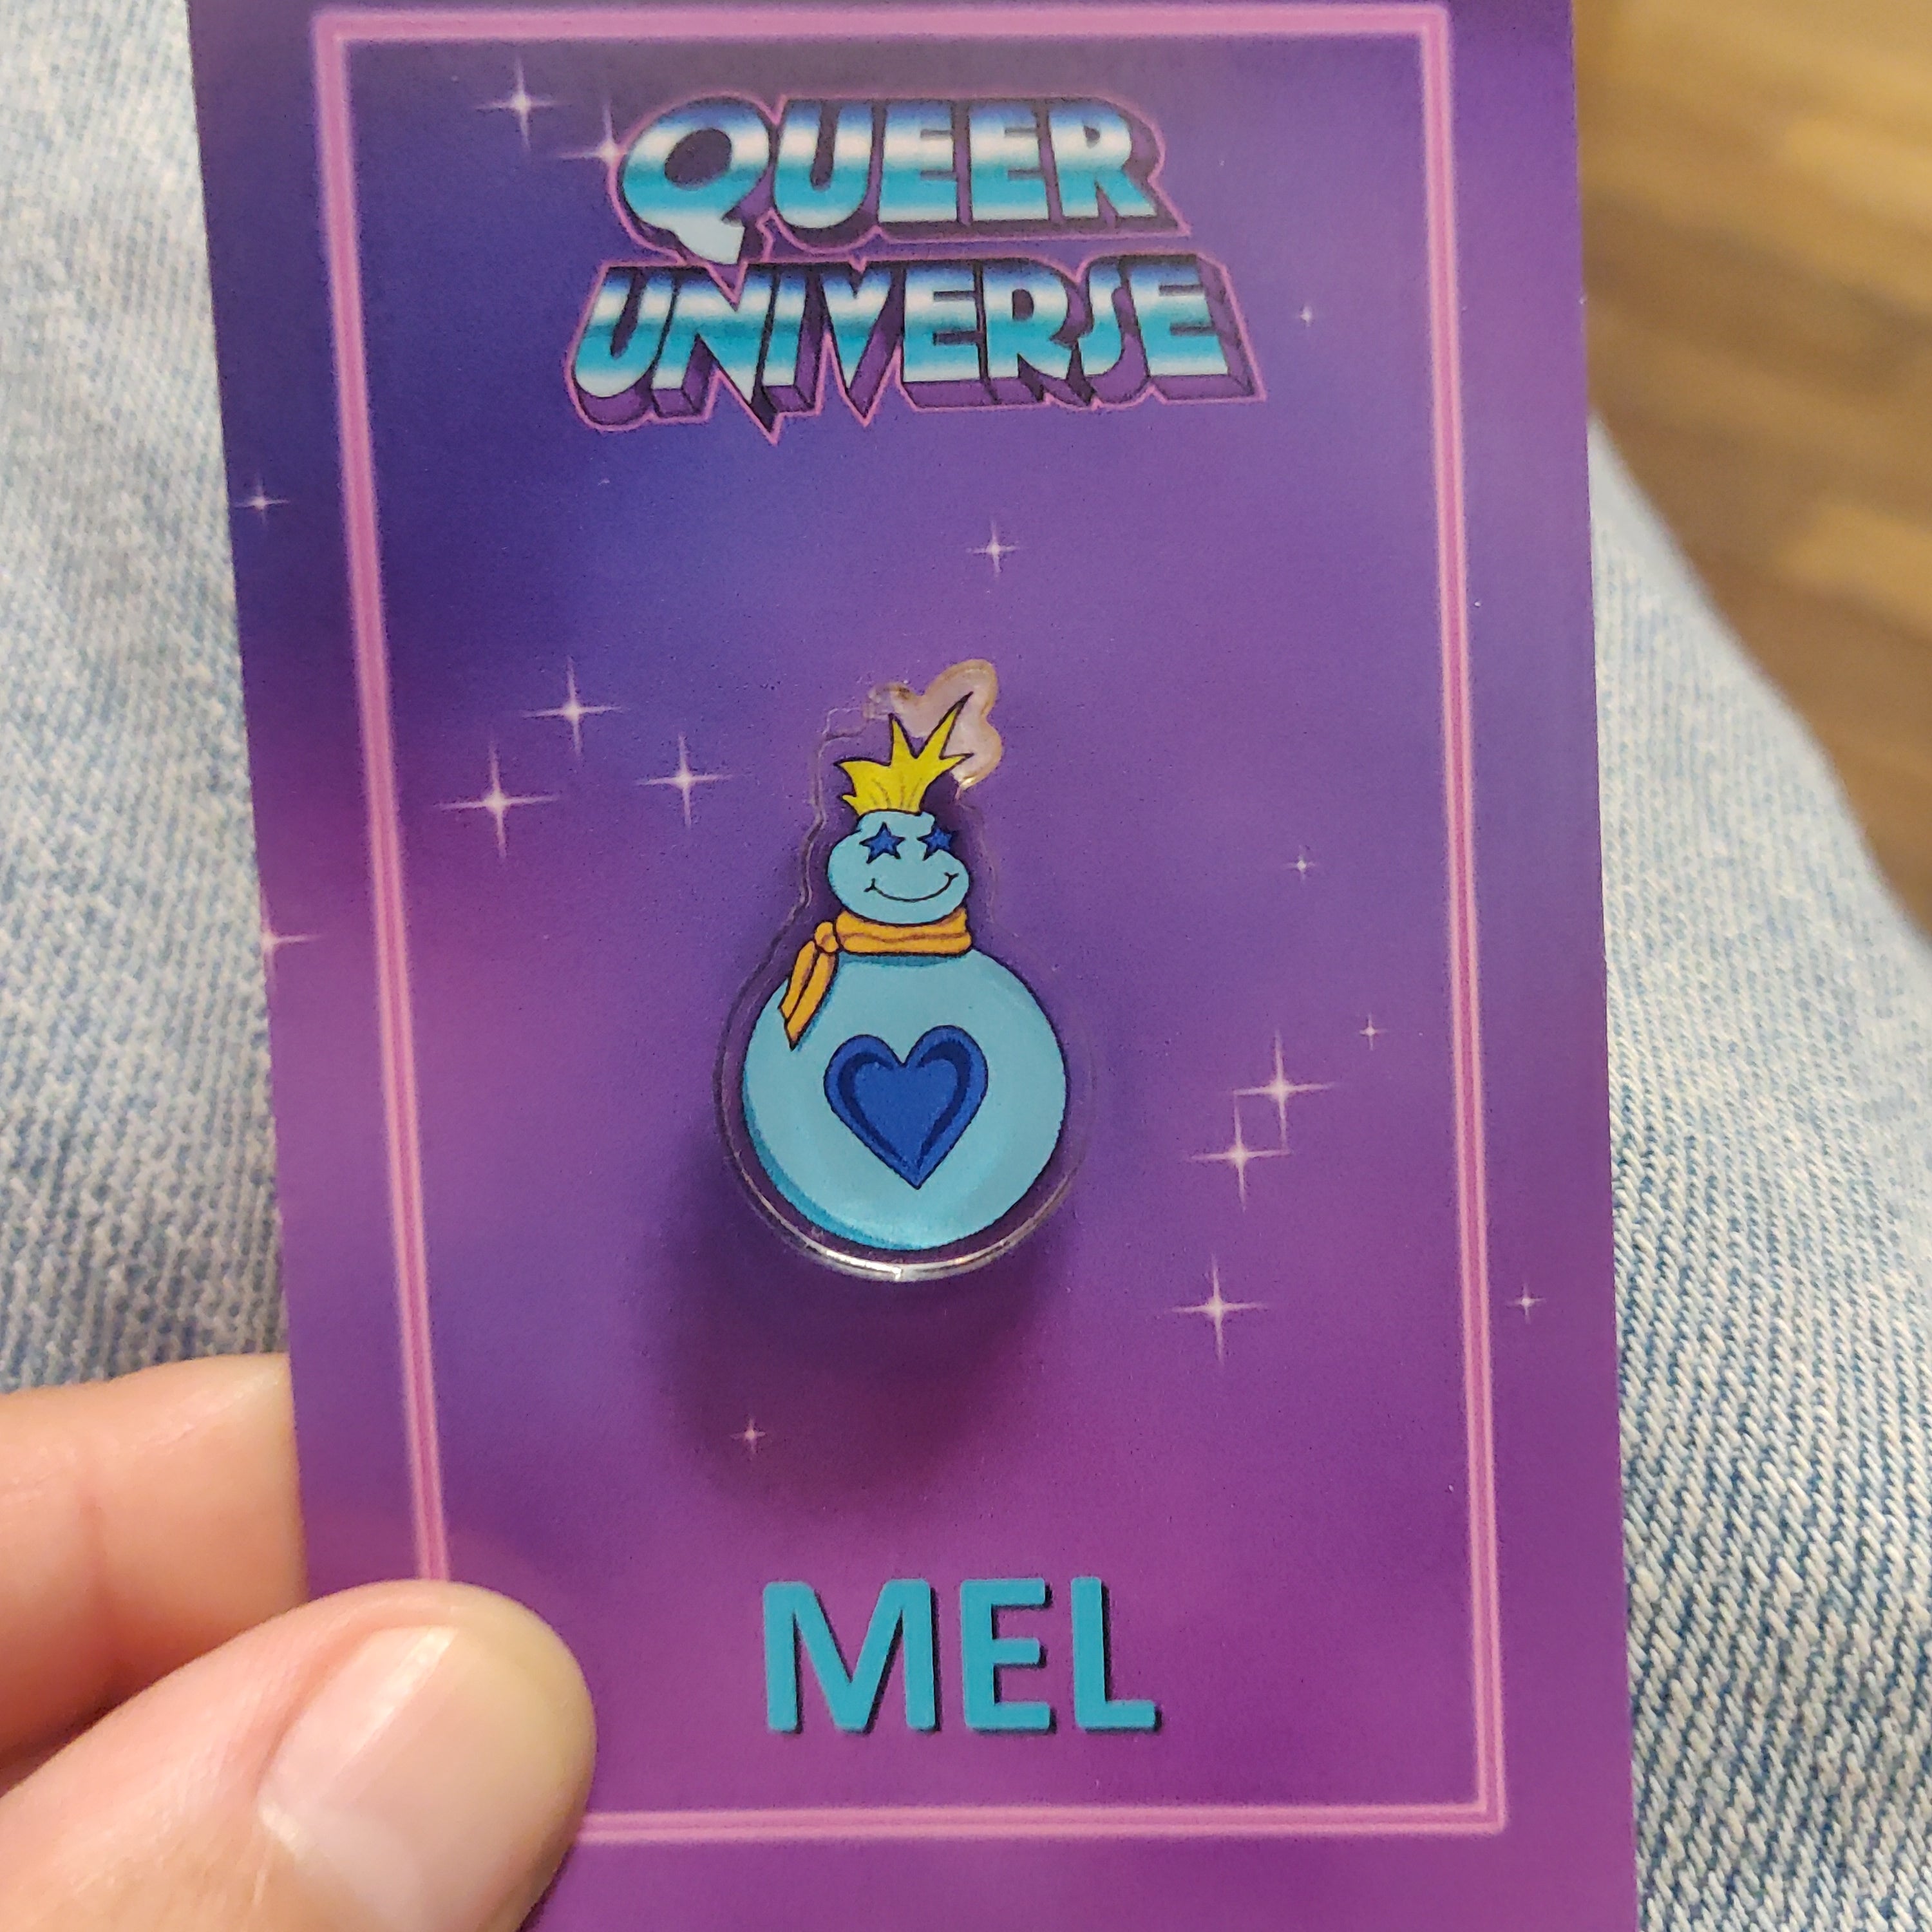 Queer Universe " Mel " ACRYLIC PIN